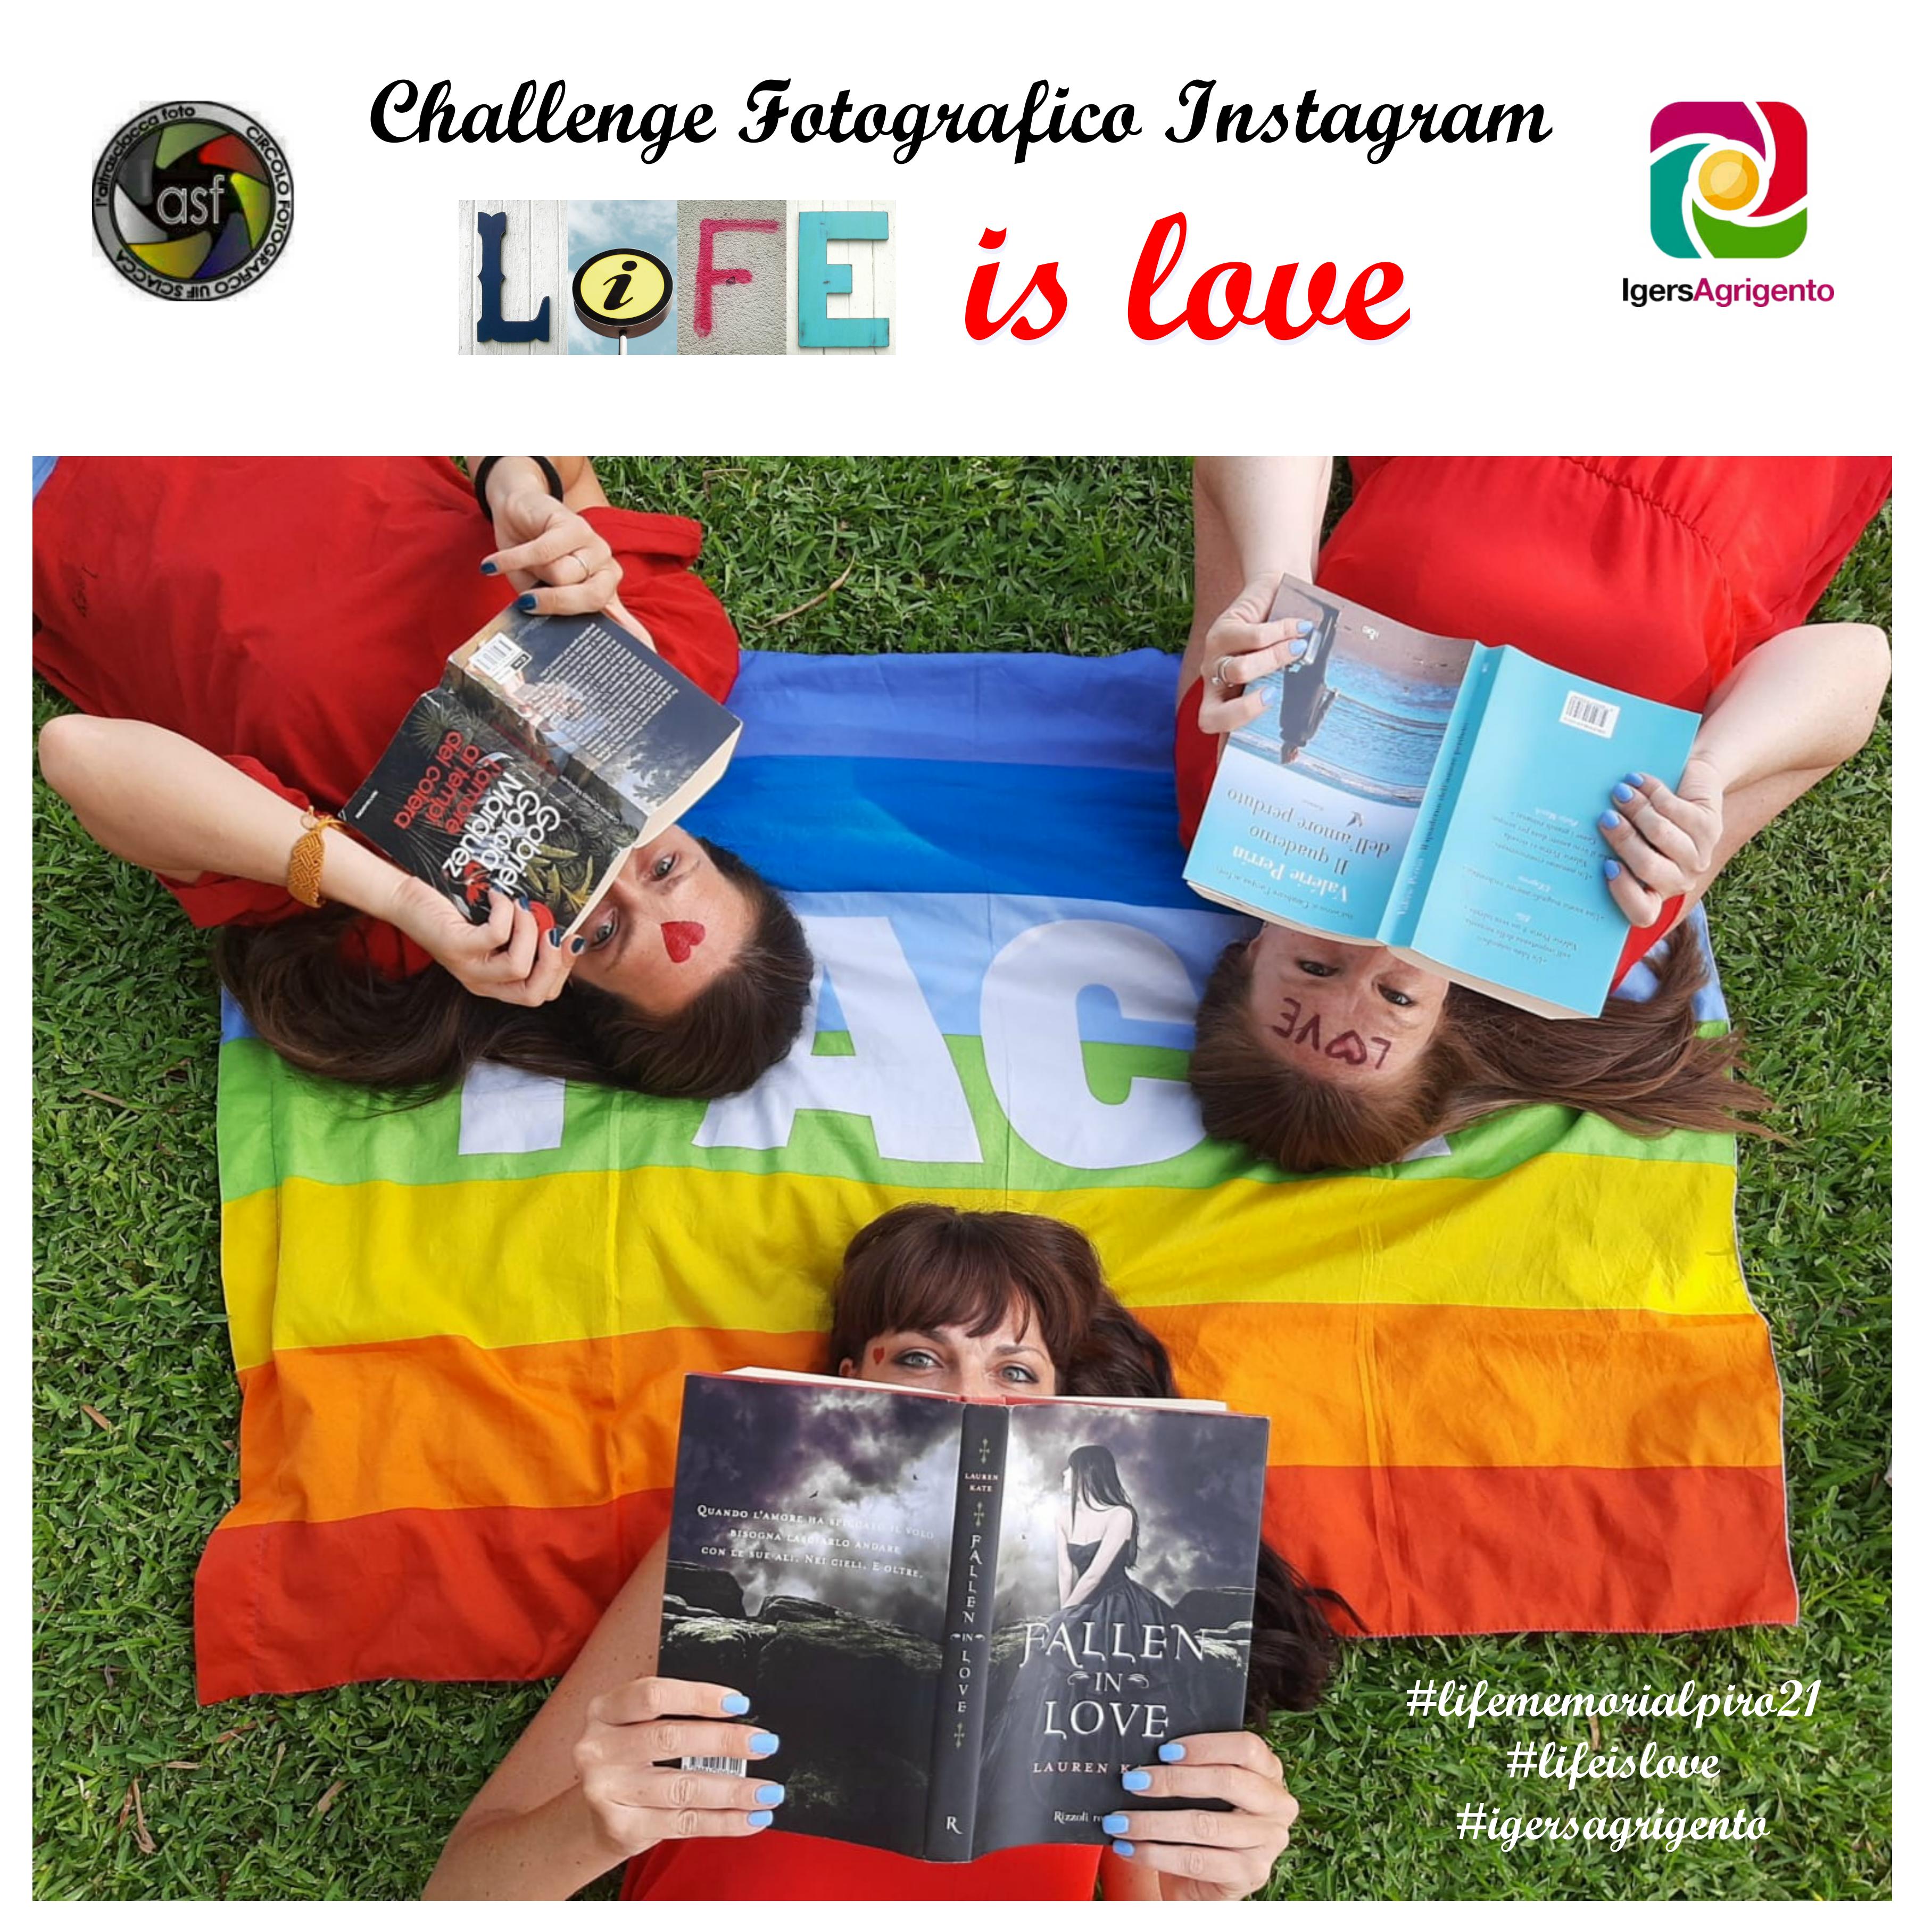 Prorogata la scadenza del Challenge Fotografico Instagram “LIFE is love”